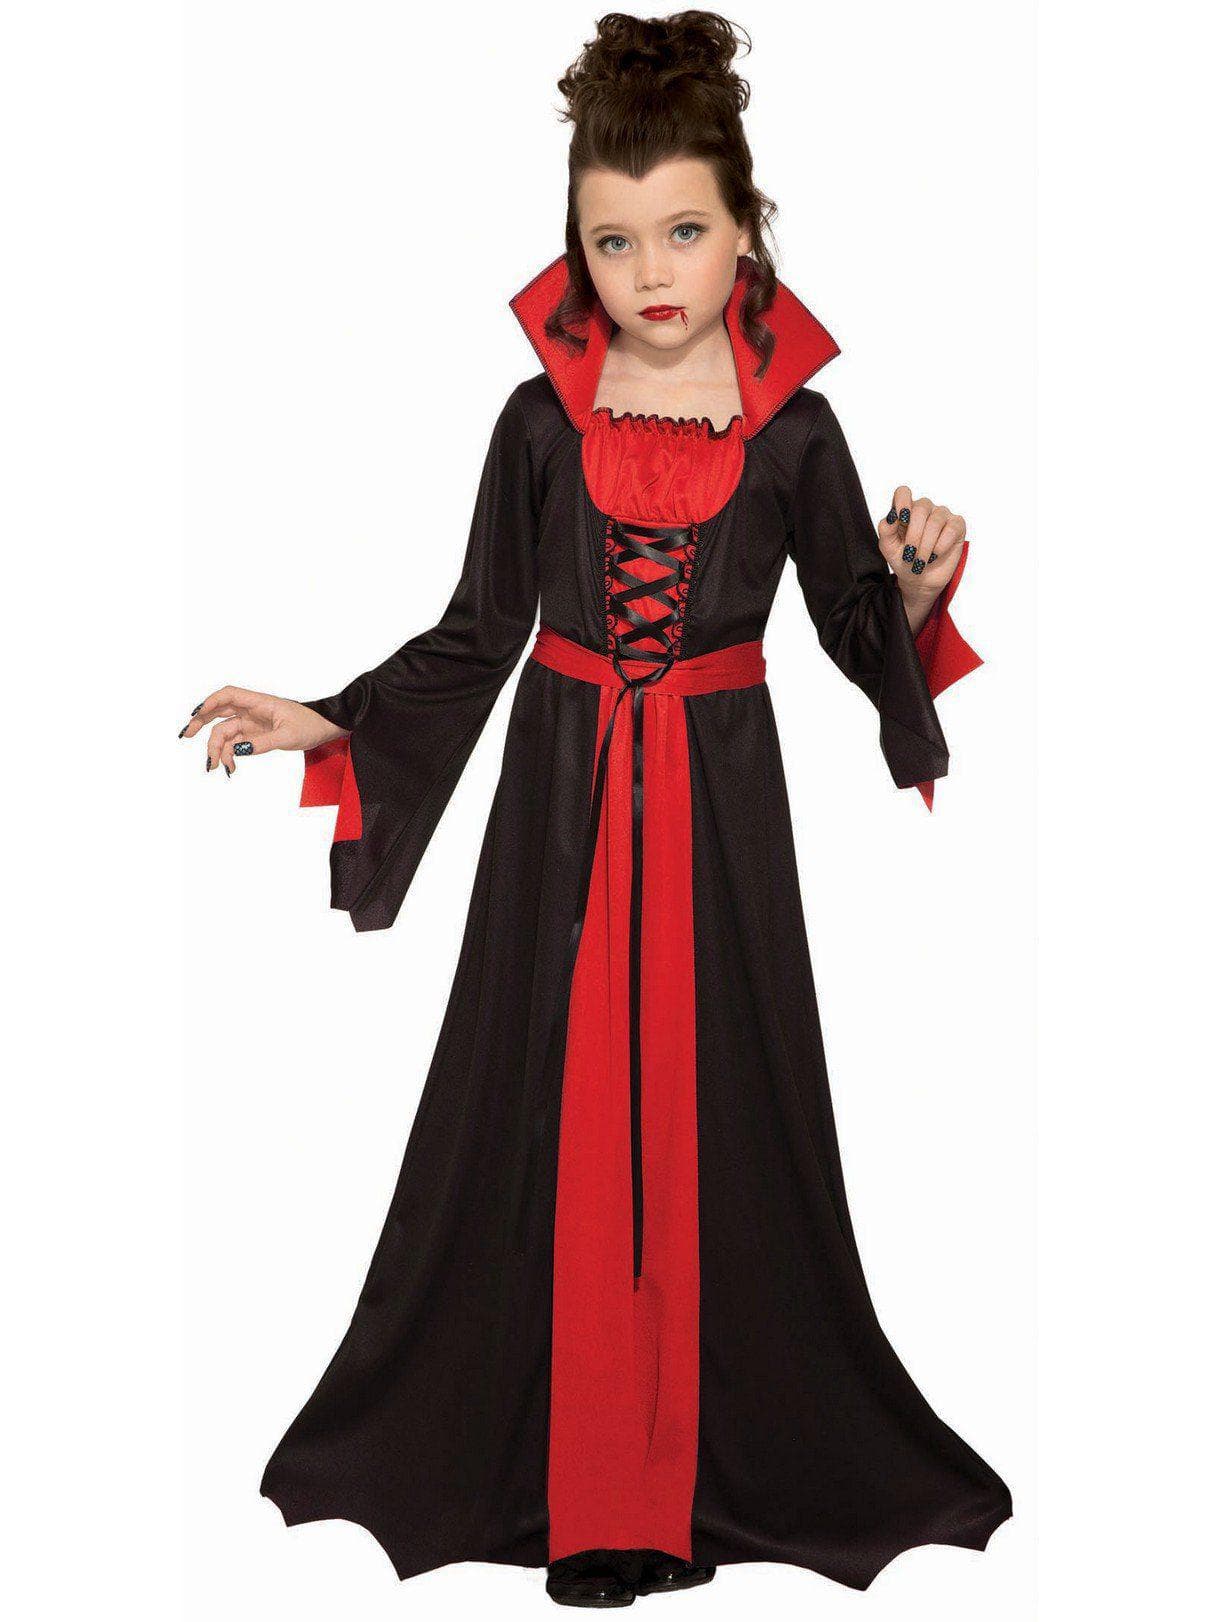 Kid's Promo Vampiress Costume - costumes.com